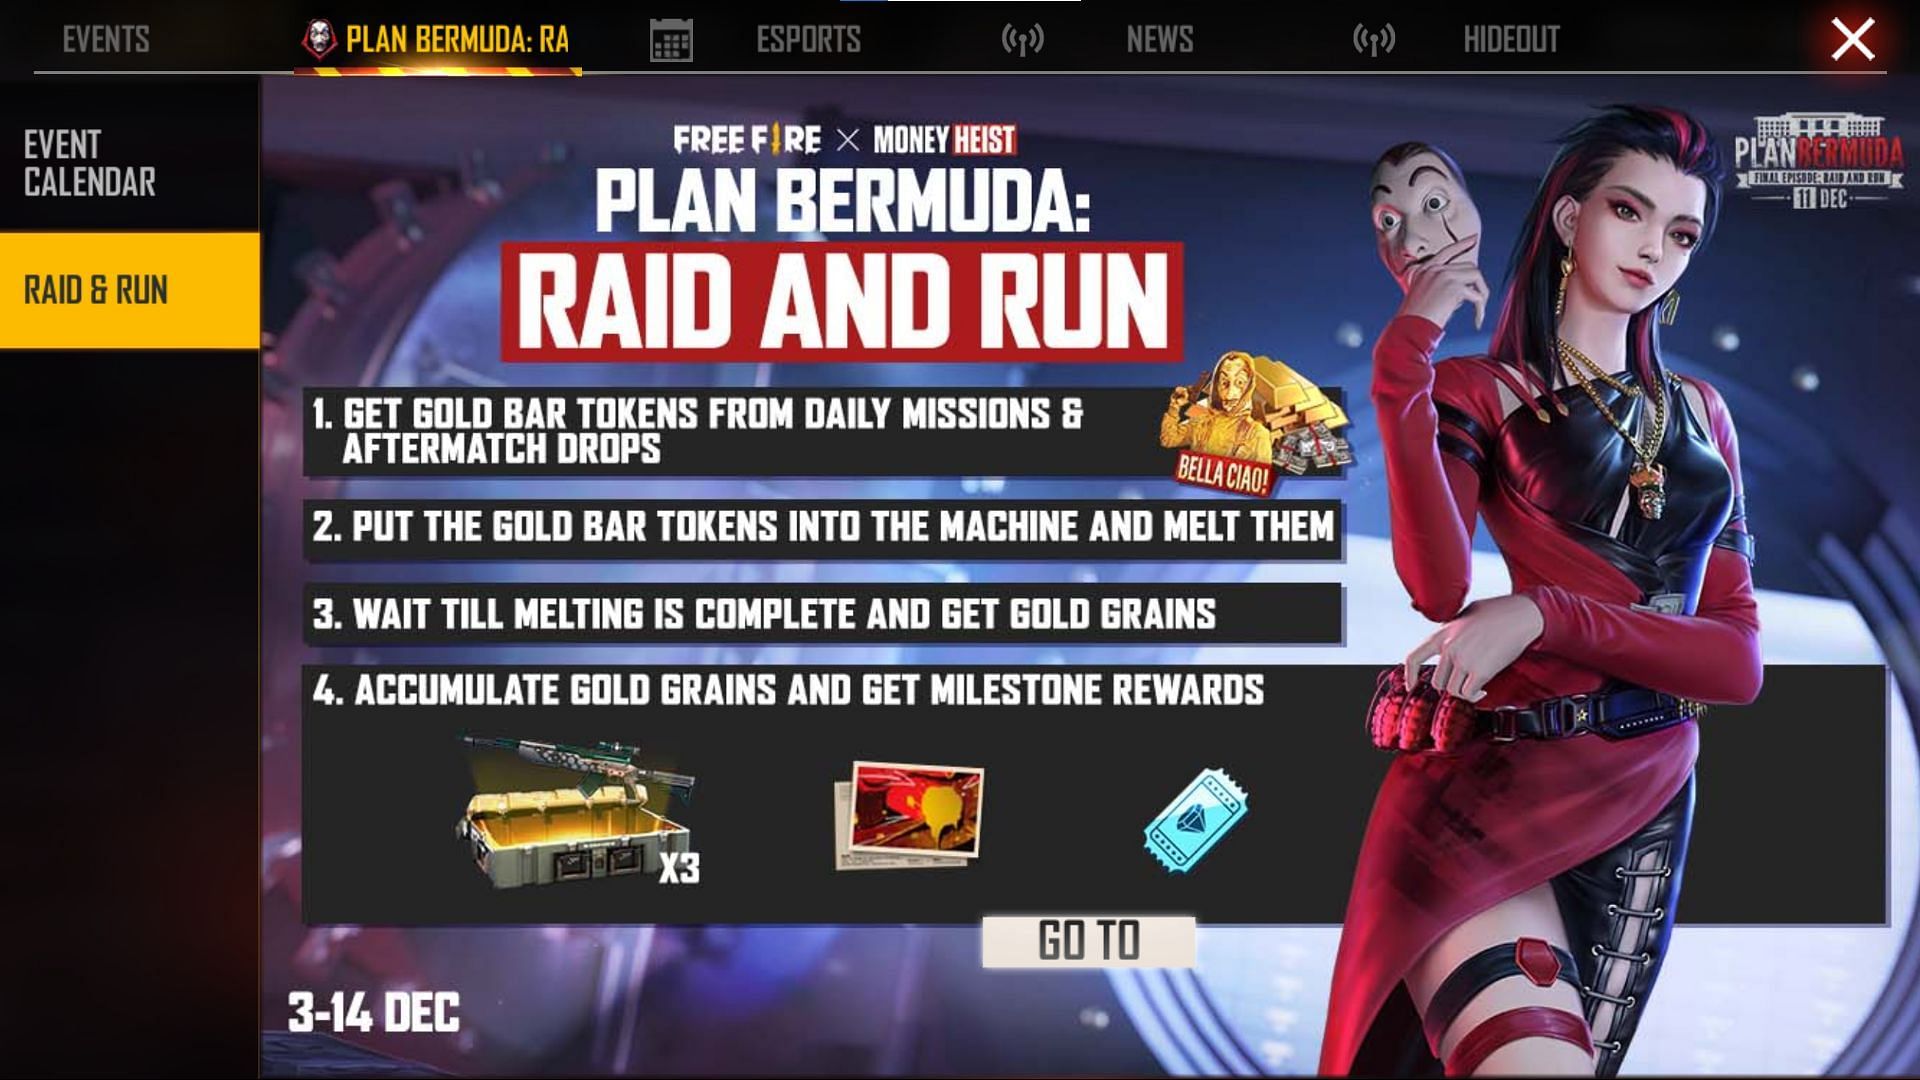 Plan Bermuda Raid and Run is underway (Image via Free Fire)